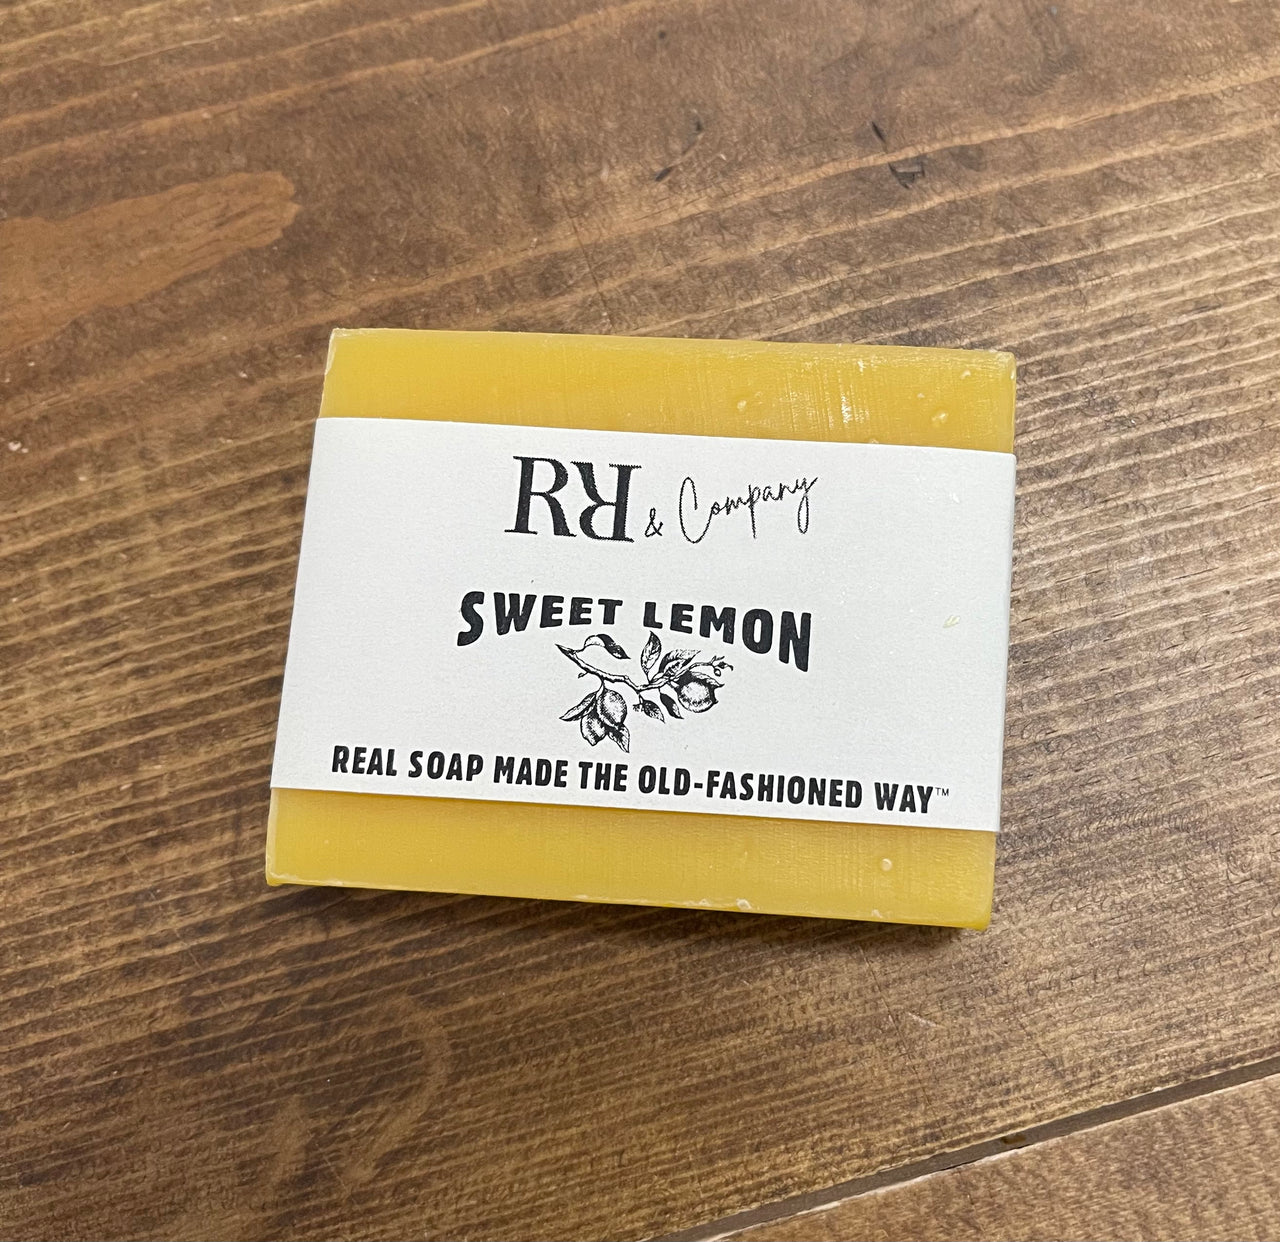 Sweet Lemon soap- RR & CO